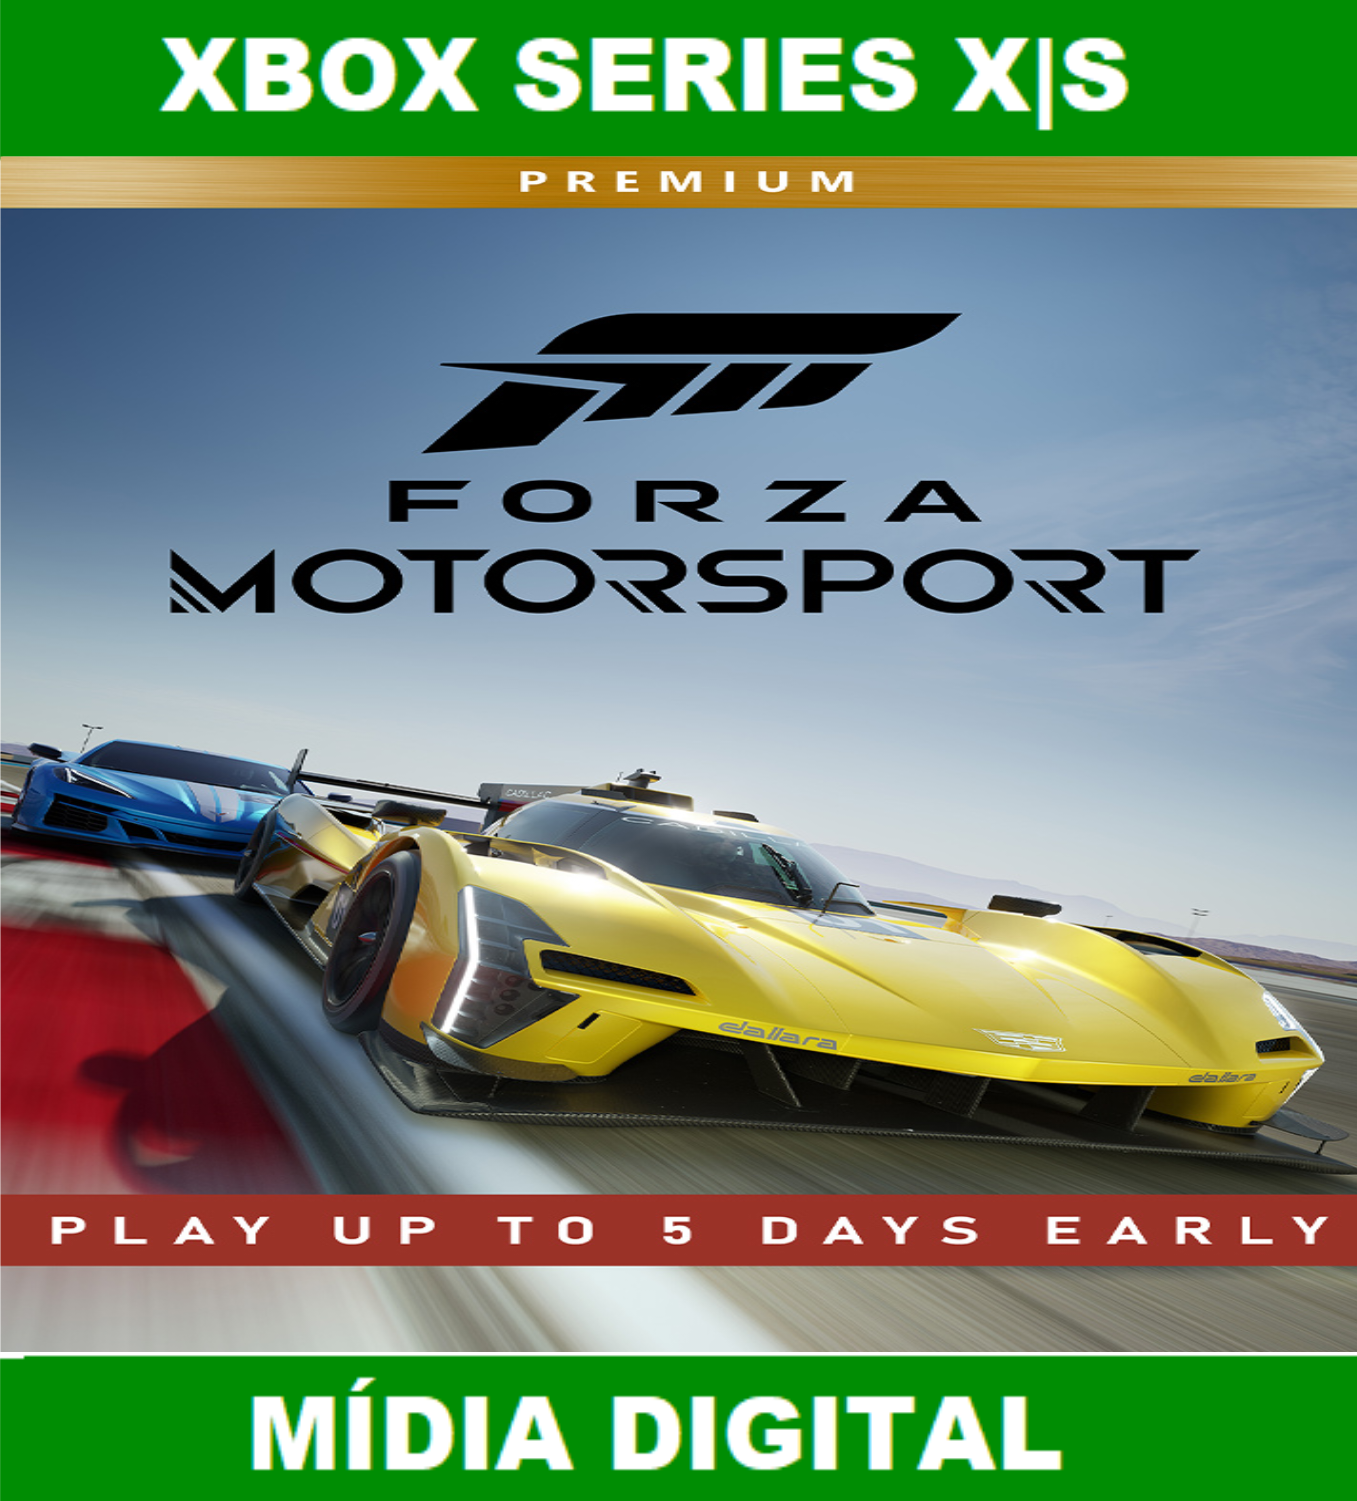 Forza Motorsport 7 - Data de Lançamento, Carros, Novidades, Xbox One X e  tudo o que sabemos